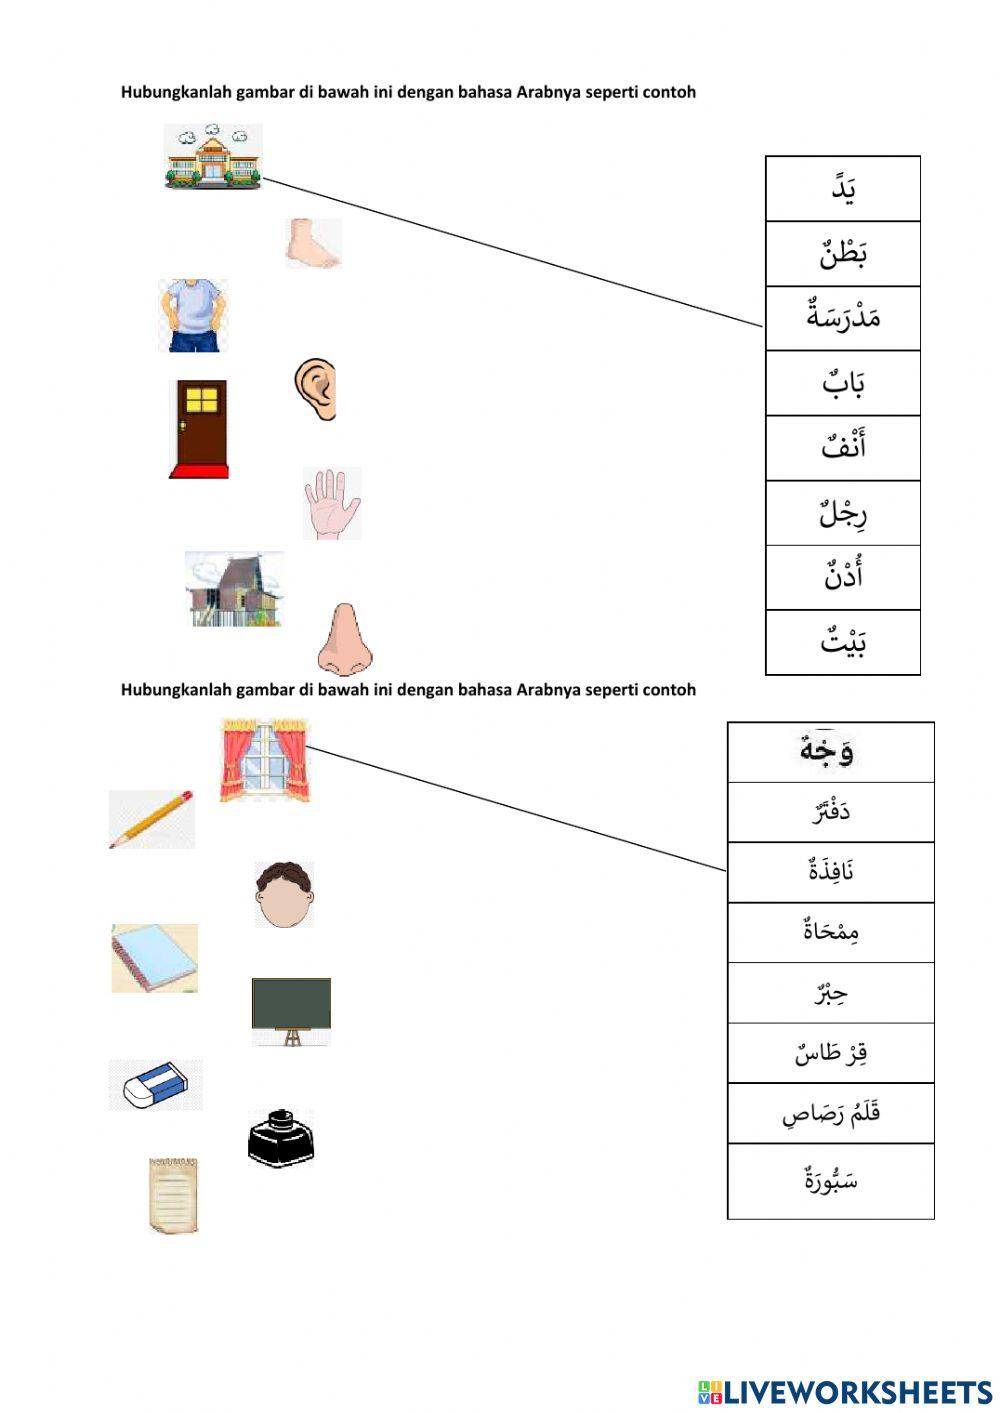 P1 Arabic Evaluation